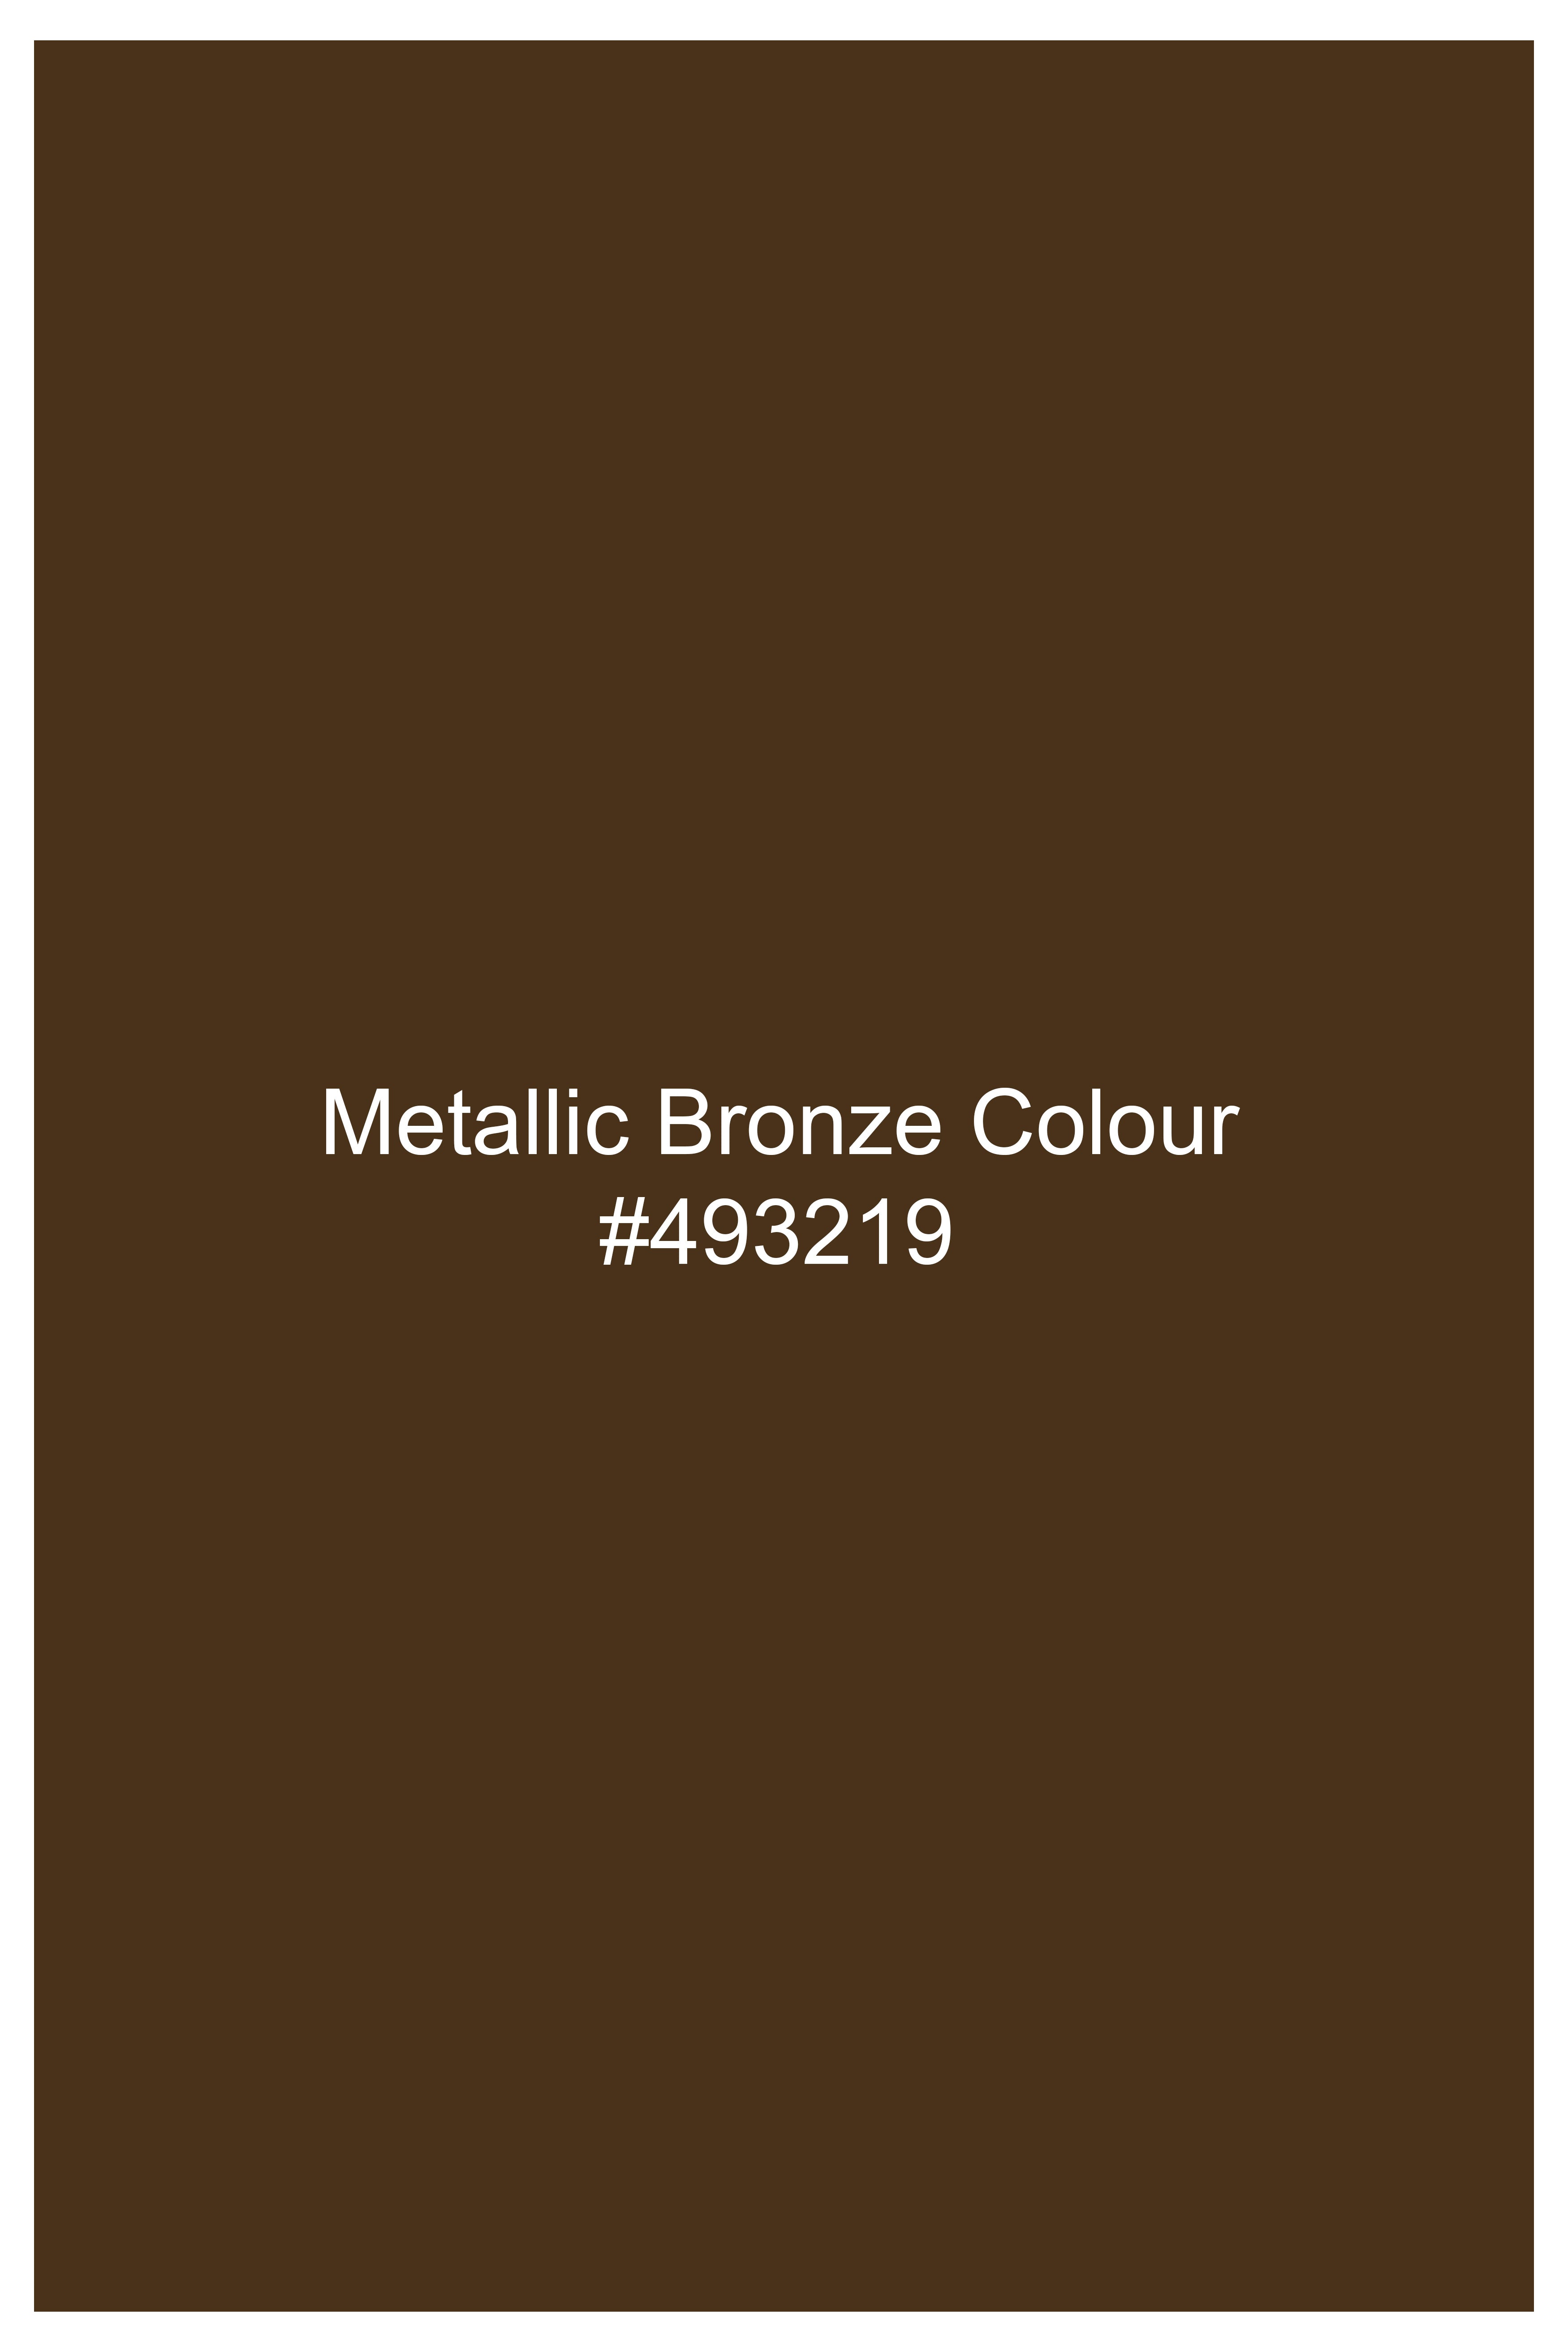 Metallic Bronze Brown Premium Cotton Stretchable traveler Suit ST2779-SB-36, ST2779-SB-38, ST2779-SB-40, ST2779-SB-42, ST2779-SB-44, ST2779-SB-46, ST2779-SB-48, ST2779-SB-50, ST2779-SB-52, ST2779-SB-54, ST2779-SB-56, ST2779-SB-58, ST2779-SB-60